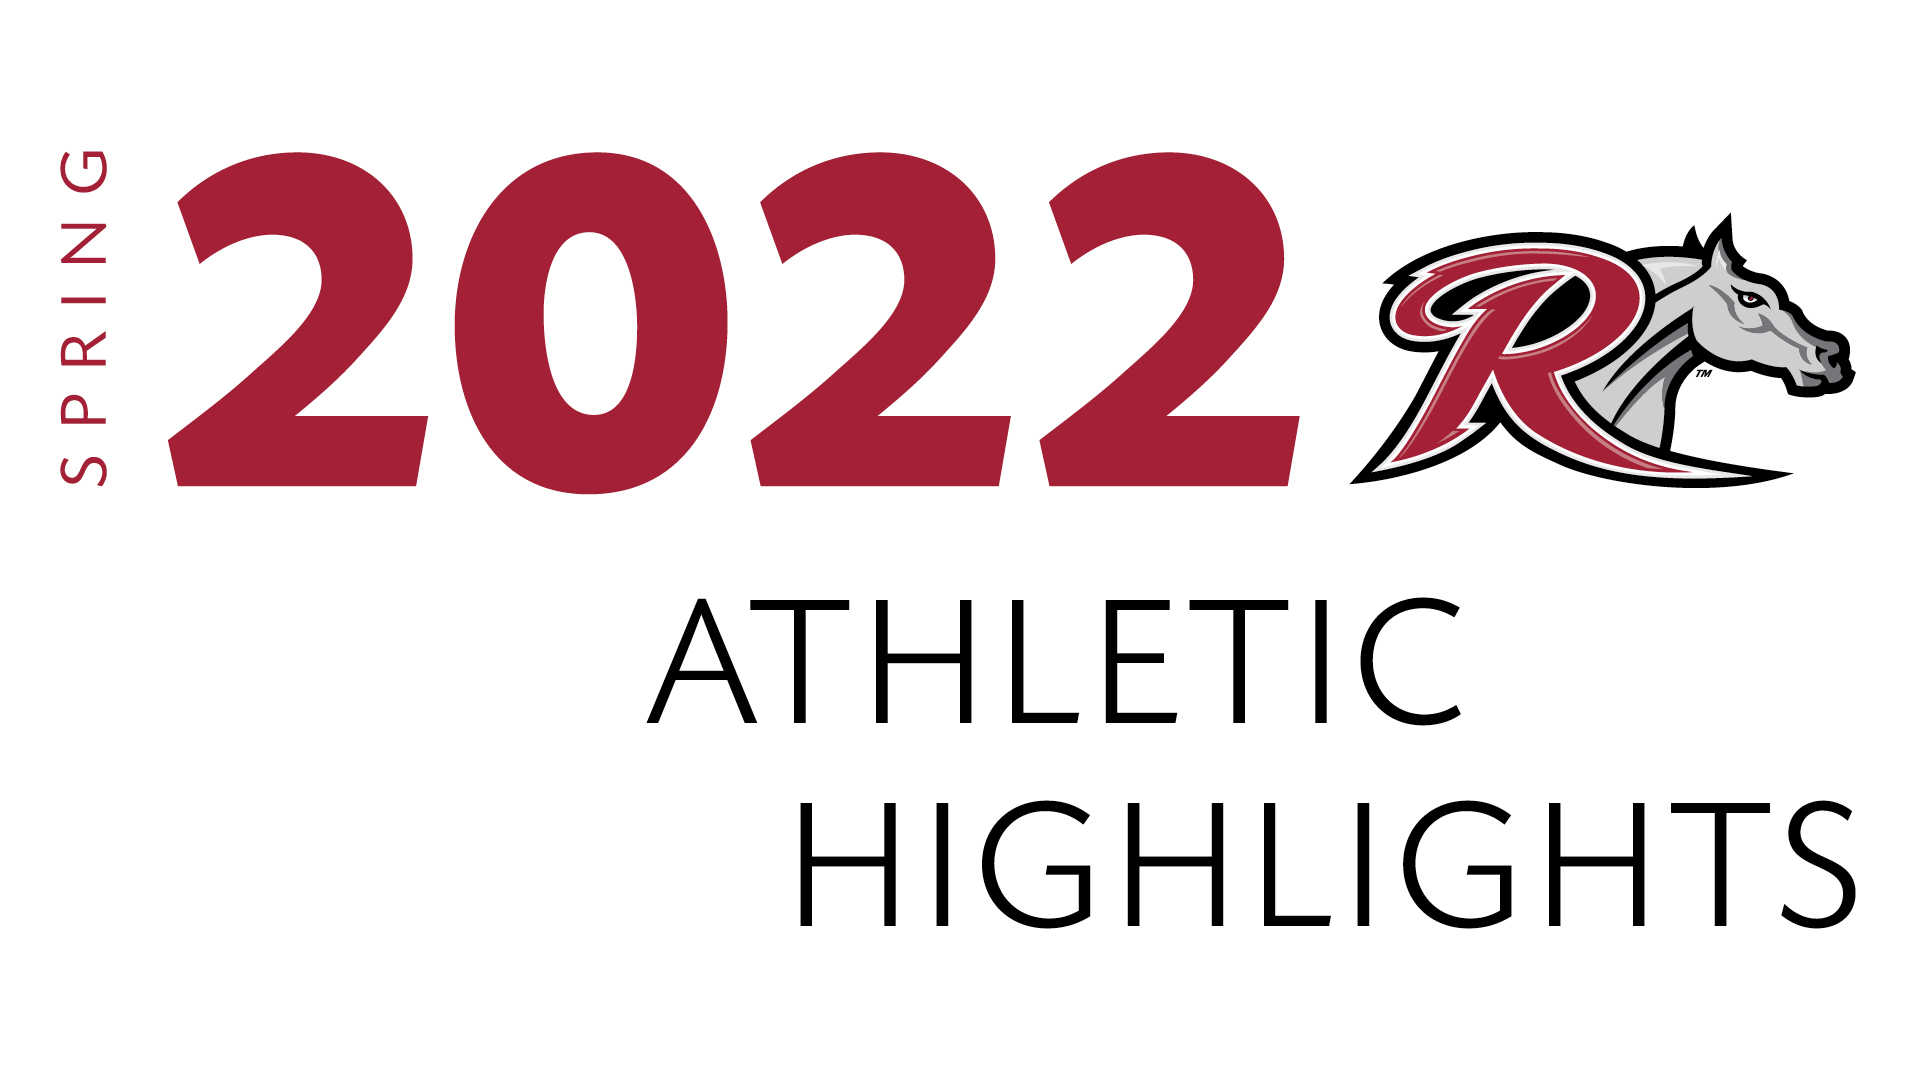 Athletic highlights spring 2022